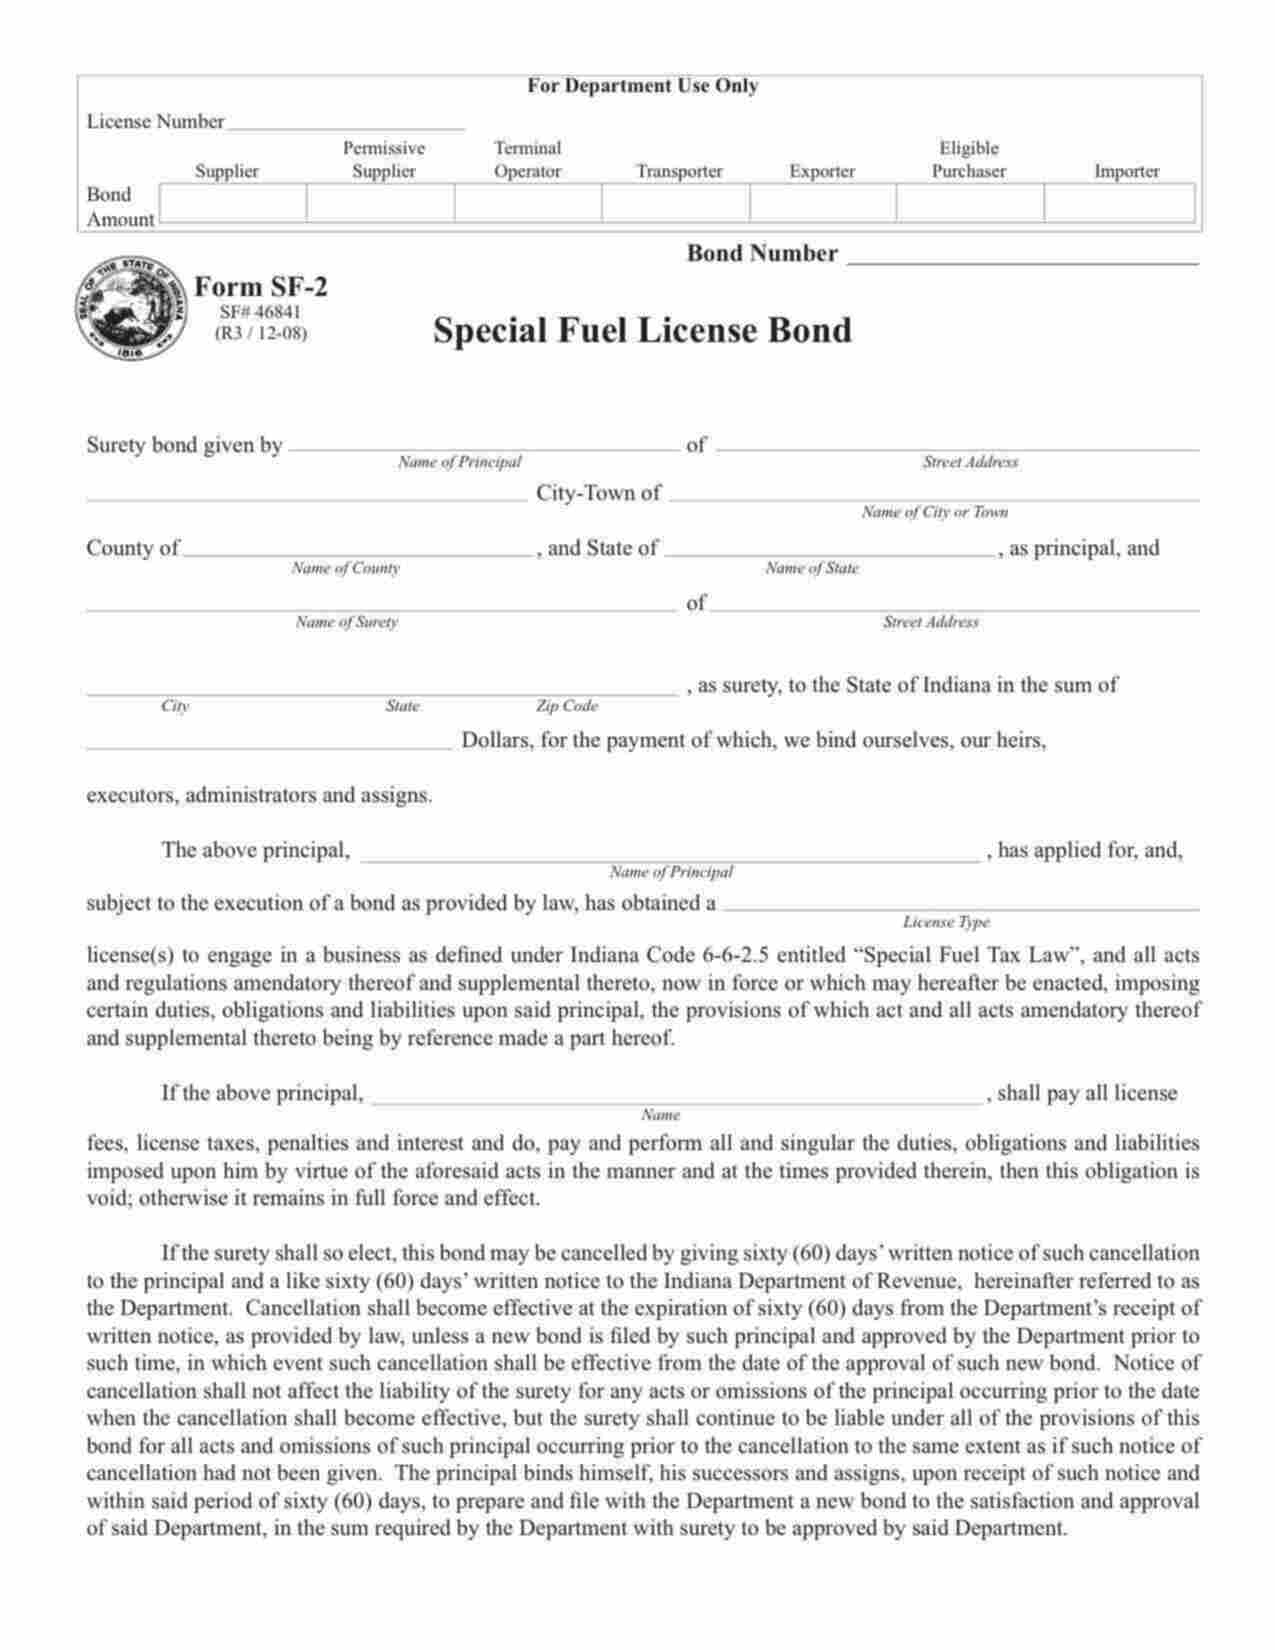 Indiana Special Fuel License - Terminal Operator Bond Form